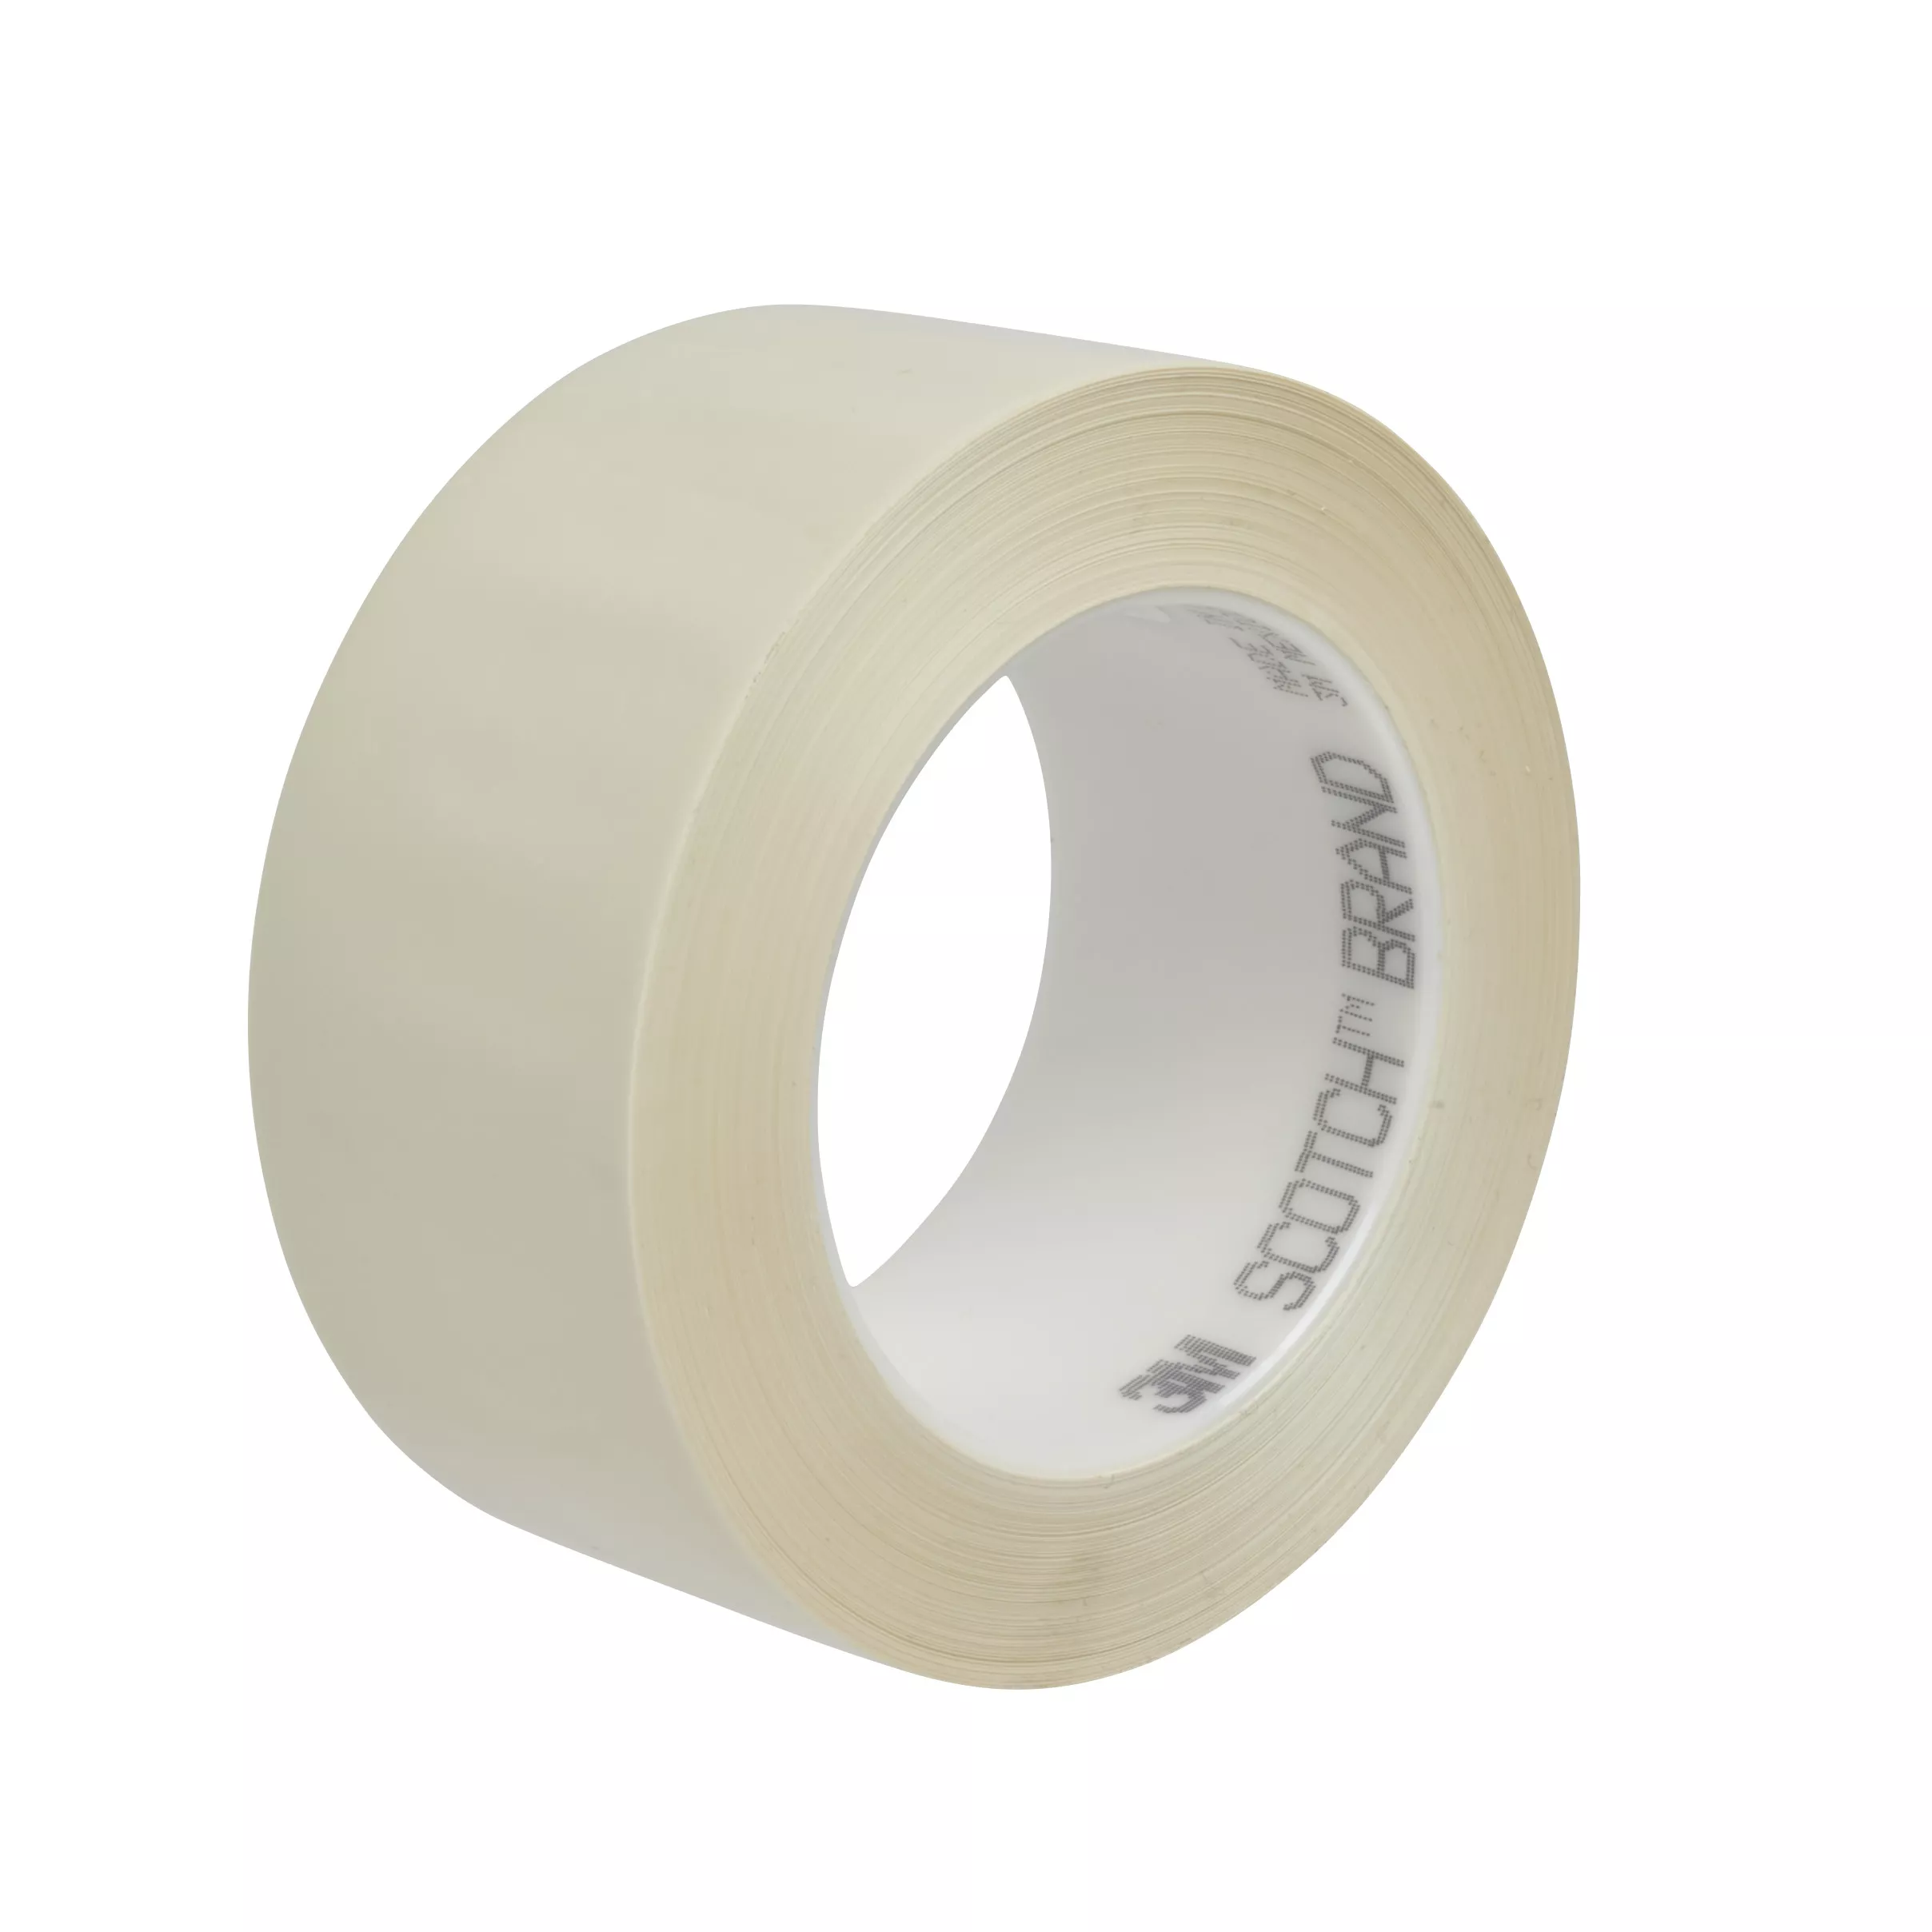 3M™ High Temperature Nylon Film Tape 855, White, 1/4 in x 72 yd, 3.6
mil, 144 Roll/Case